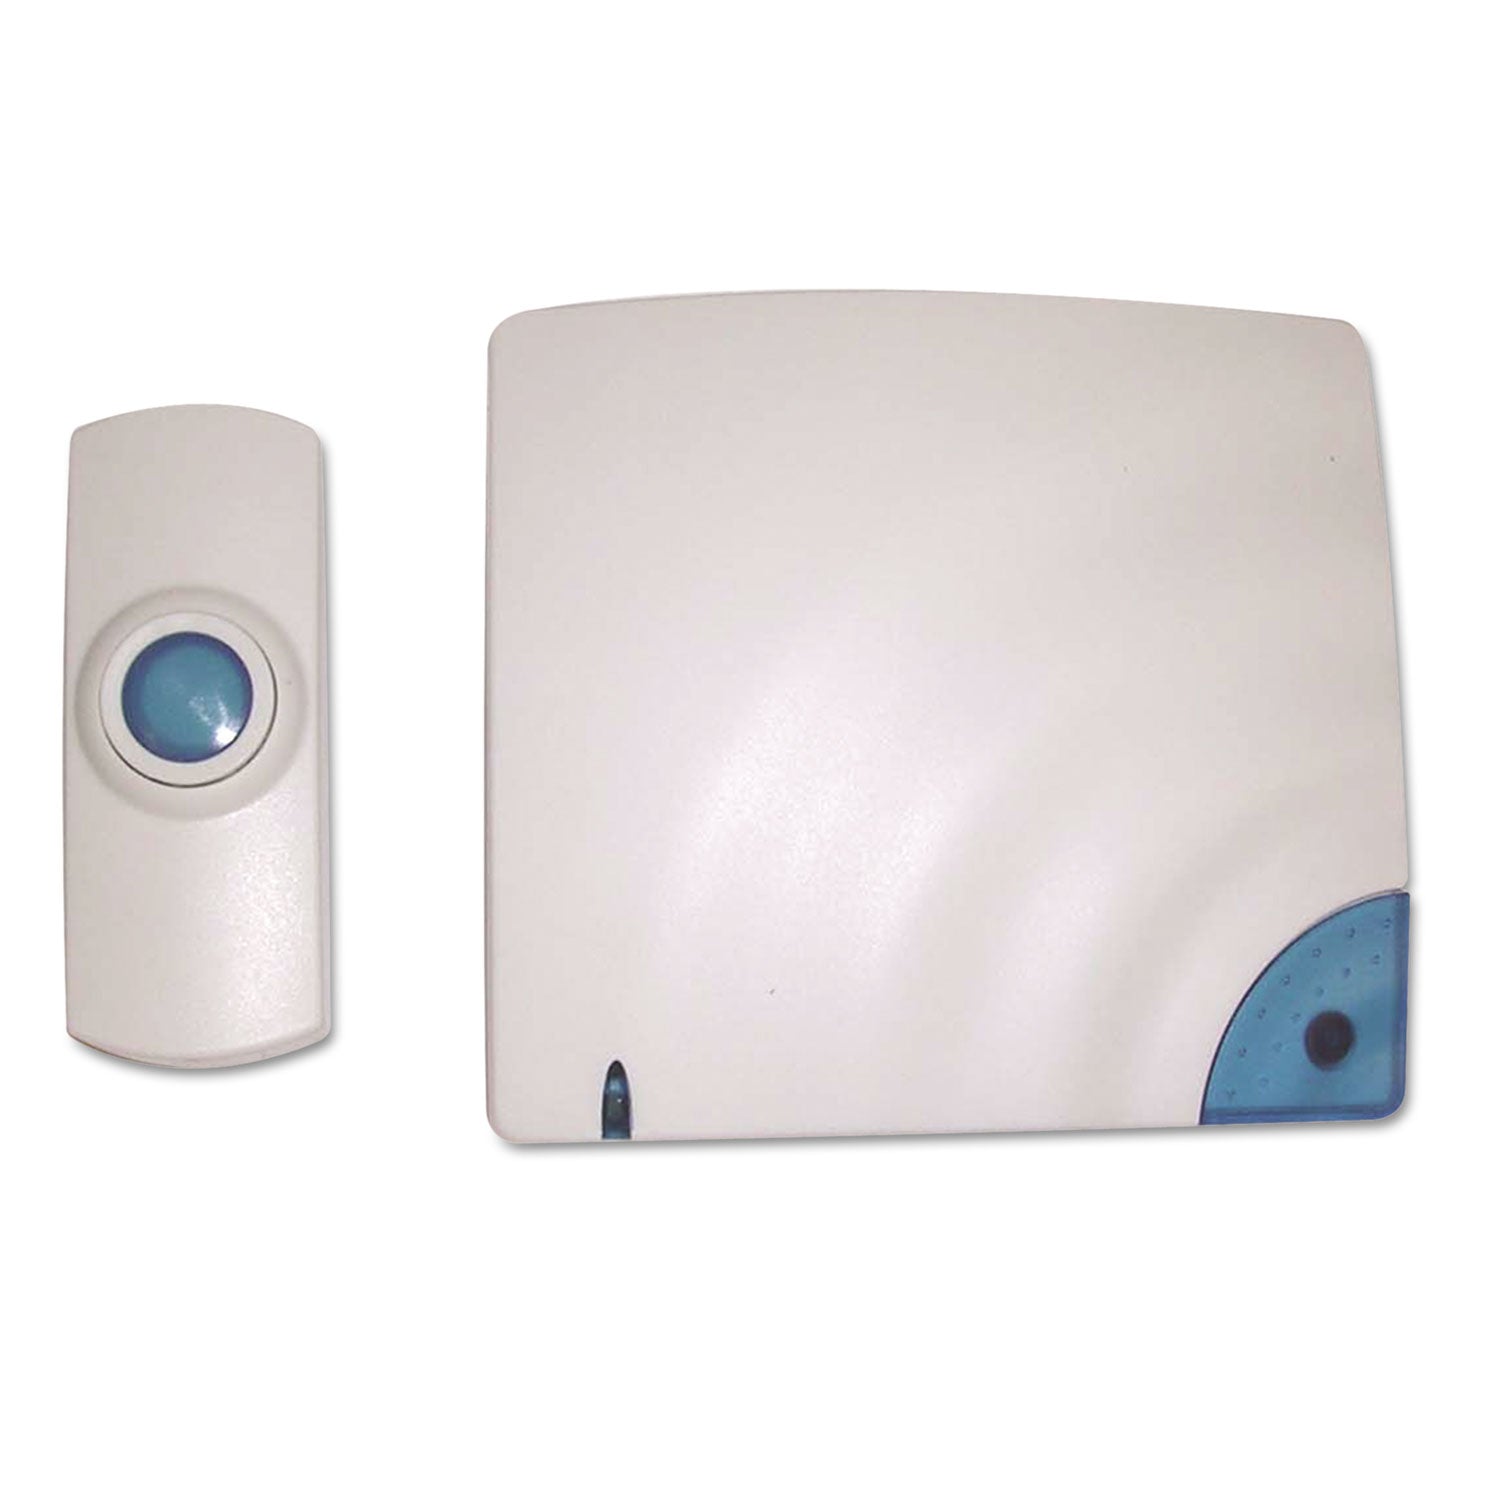 Wireless Doorbell, Battery Operated, 1.38 x 0.75 x 3.5, Bone - 